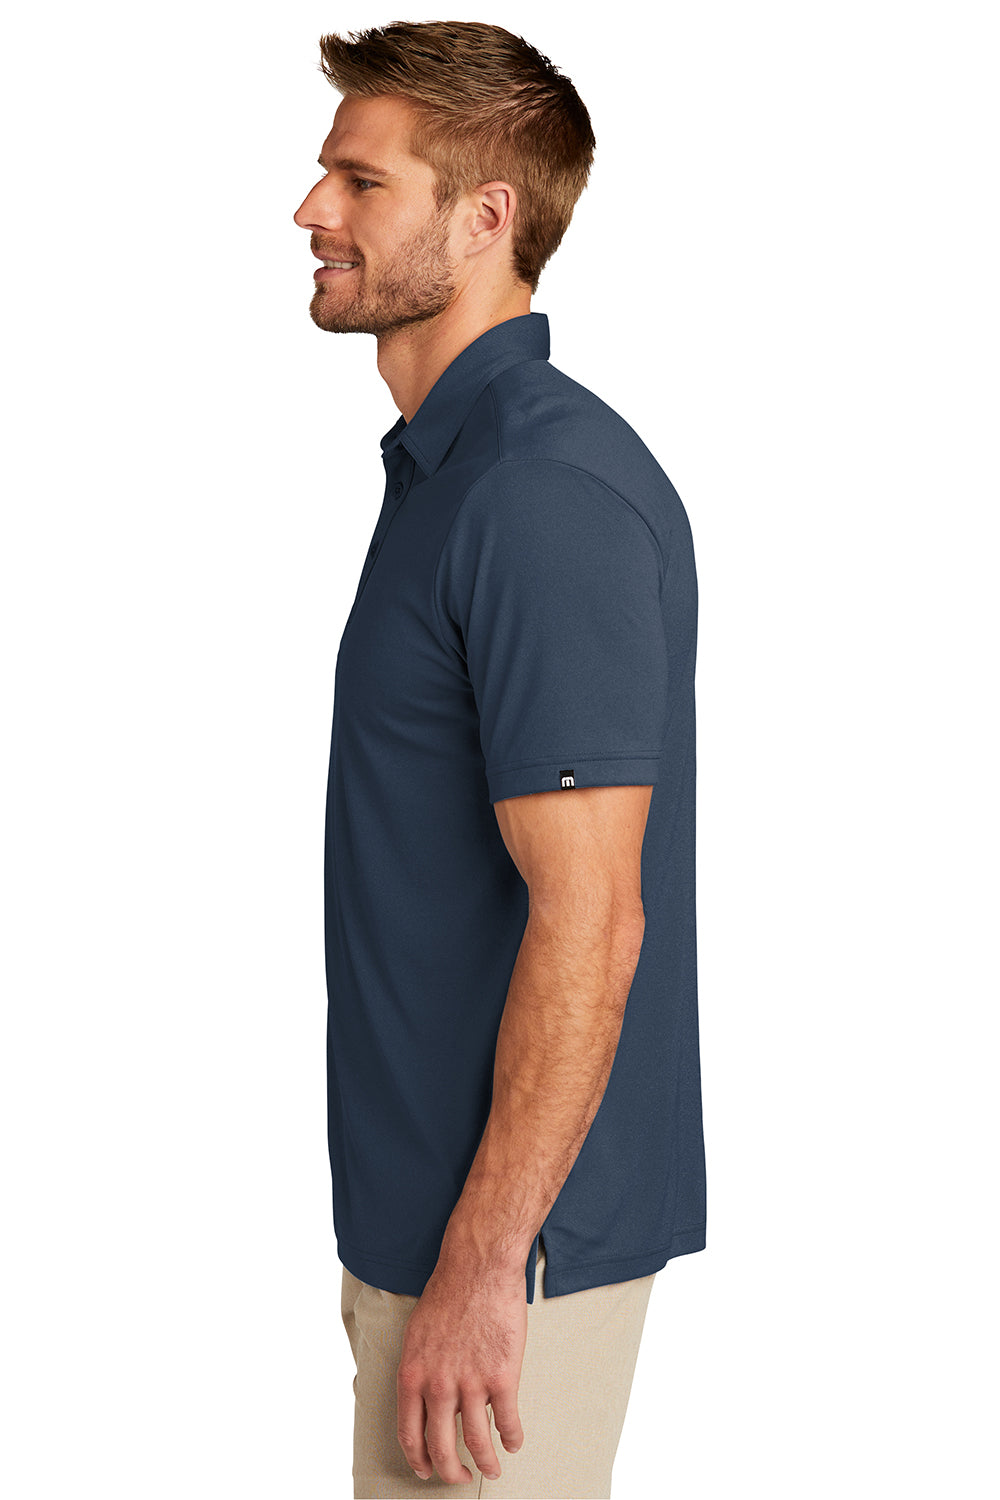 TravisMathew TM1MU410 Mens Coto Performance Moisture Wicking Short Sleeve Polo Shirt Blue Nights Model Side